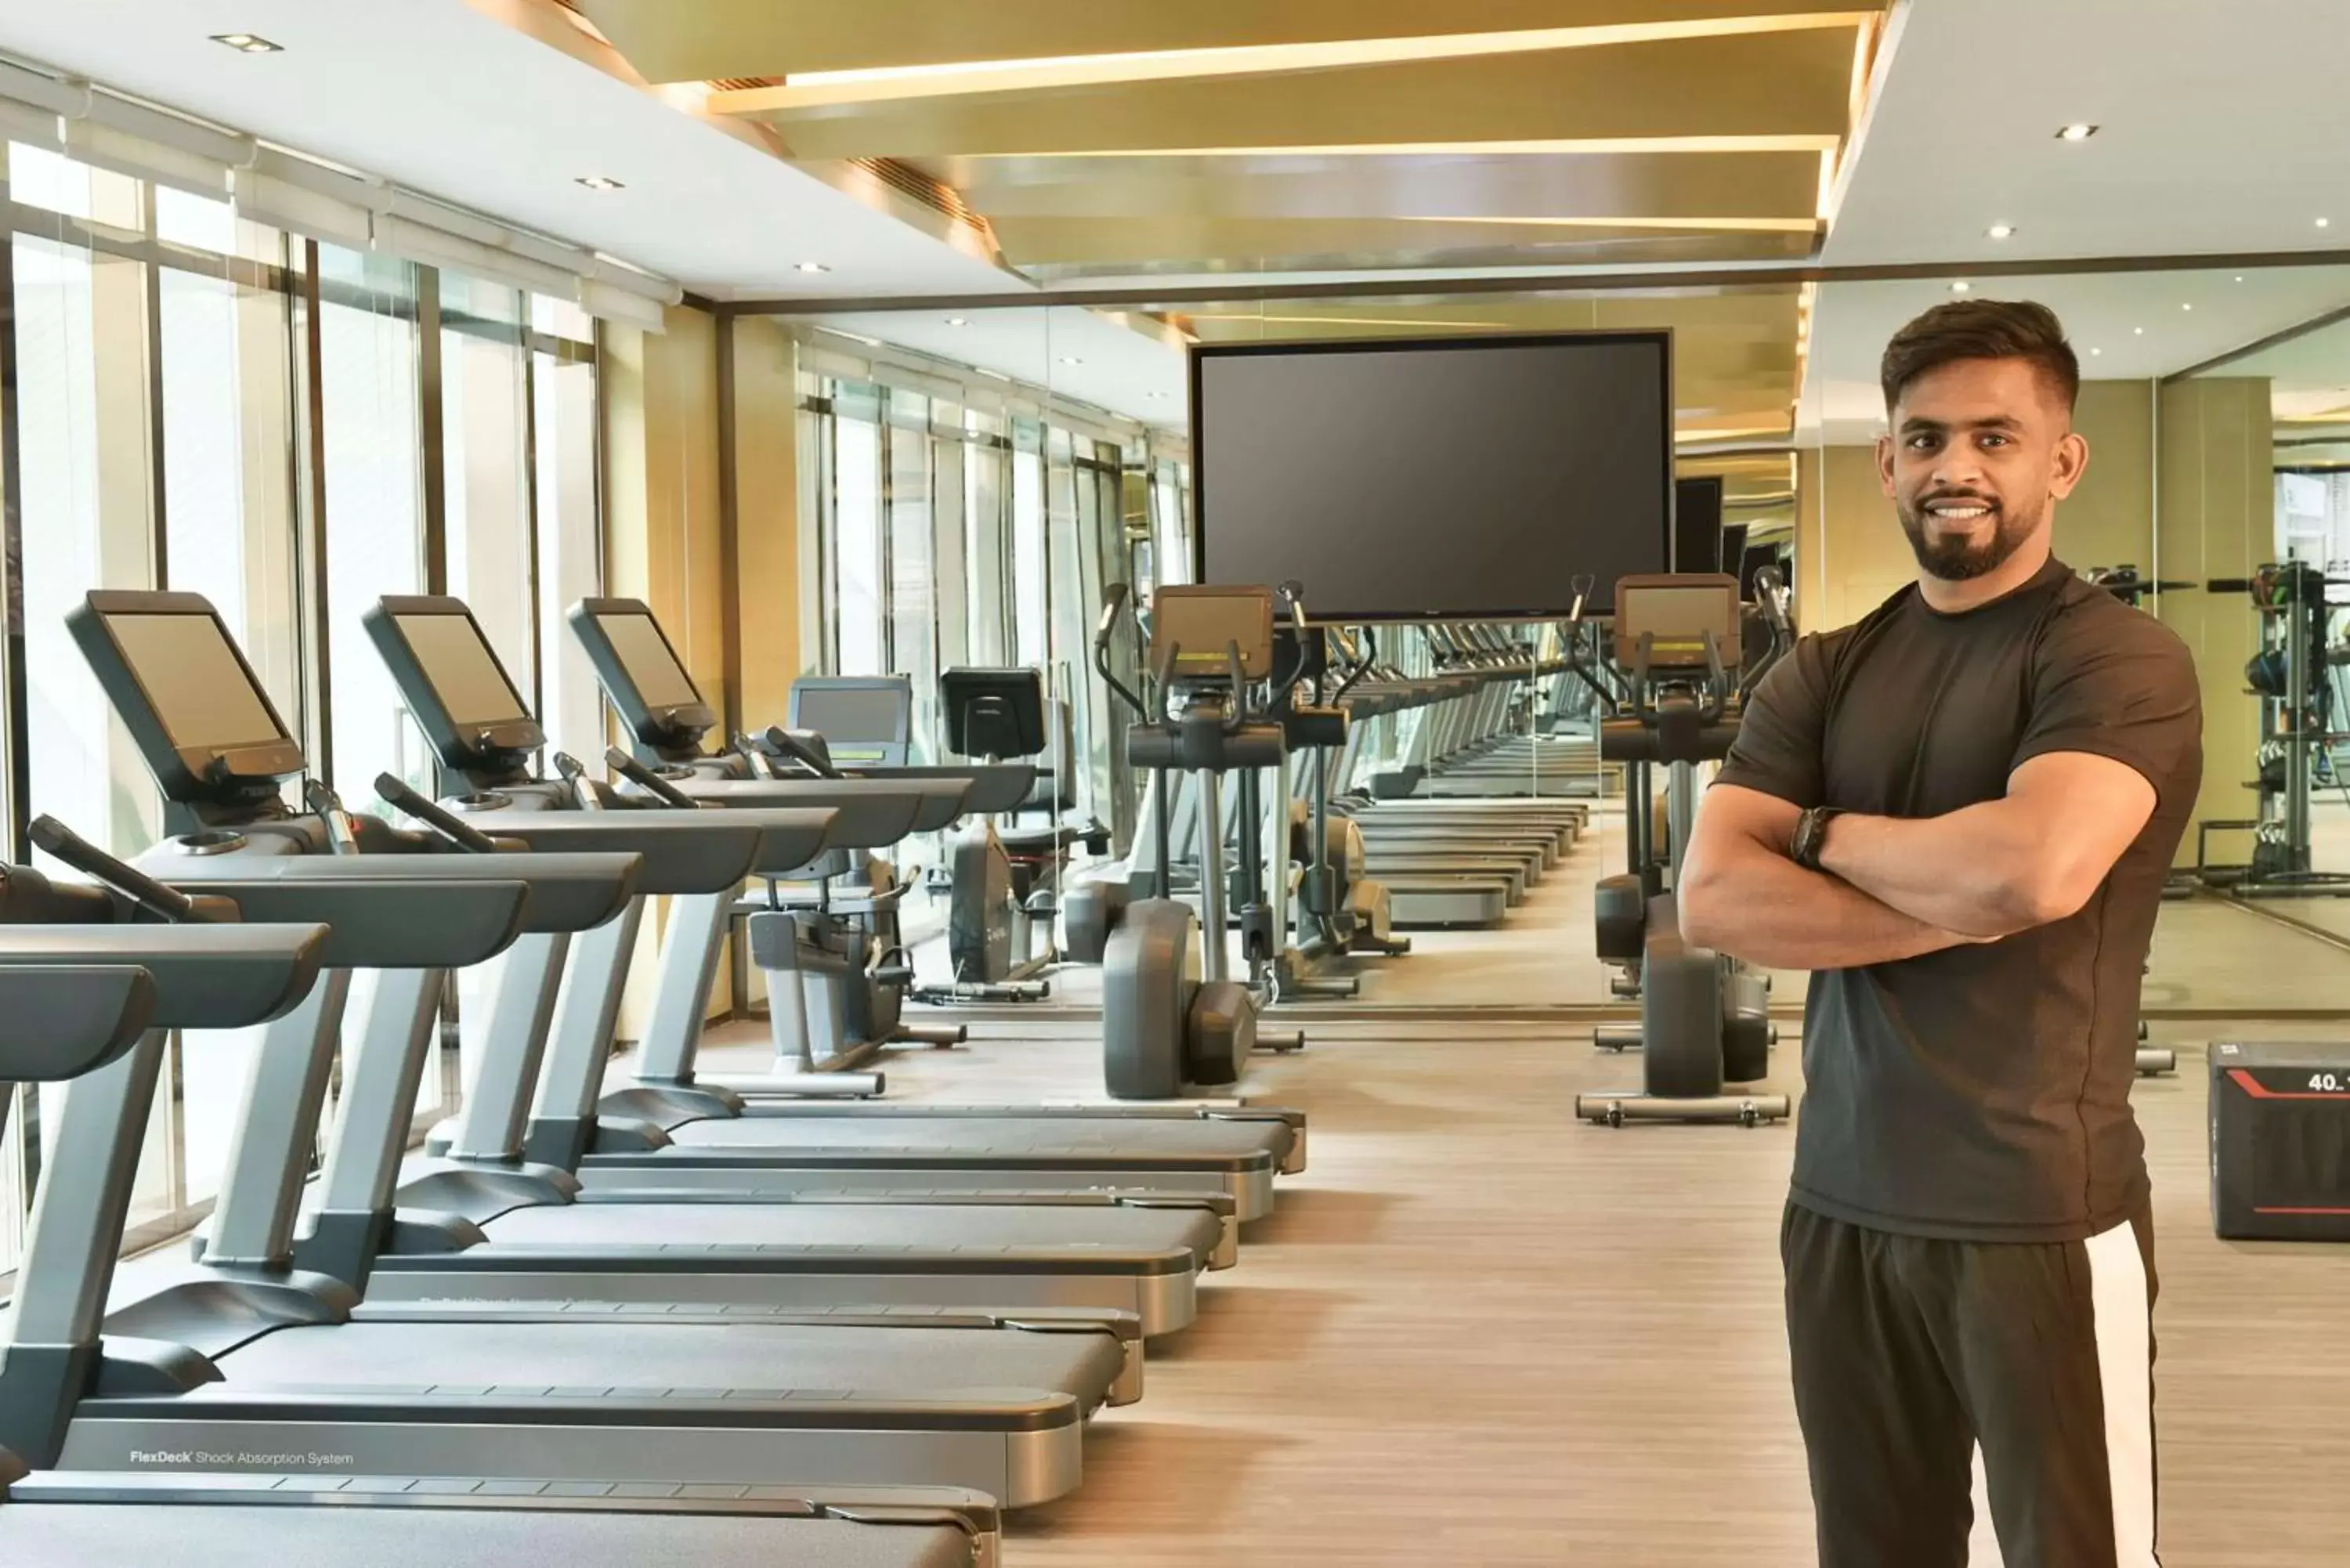 Fitness centre/facilities, Fitness Center/Facilities in Hilton Bahrain